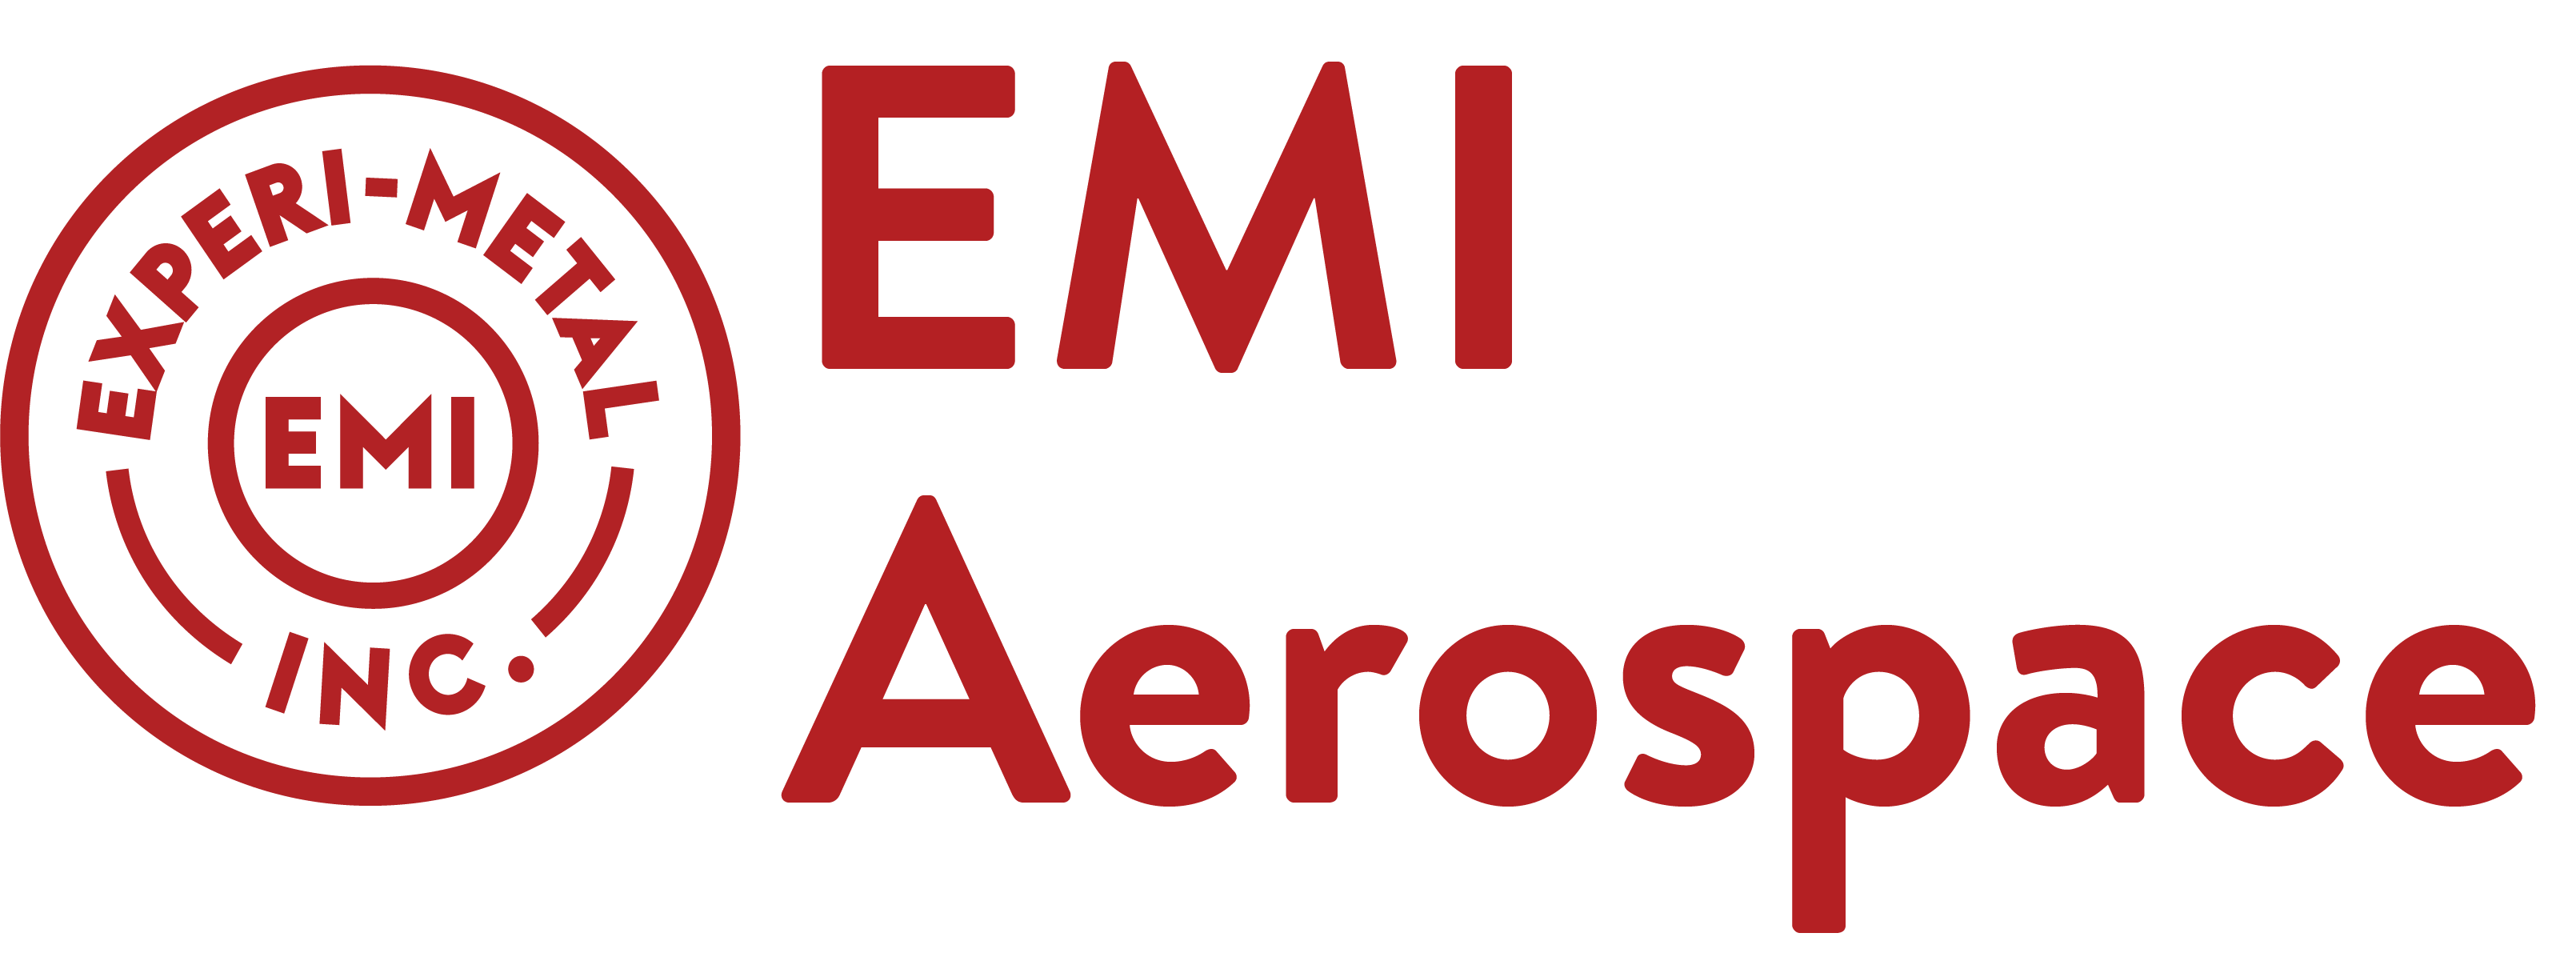 2020_EMI_Aerospace_Red